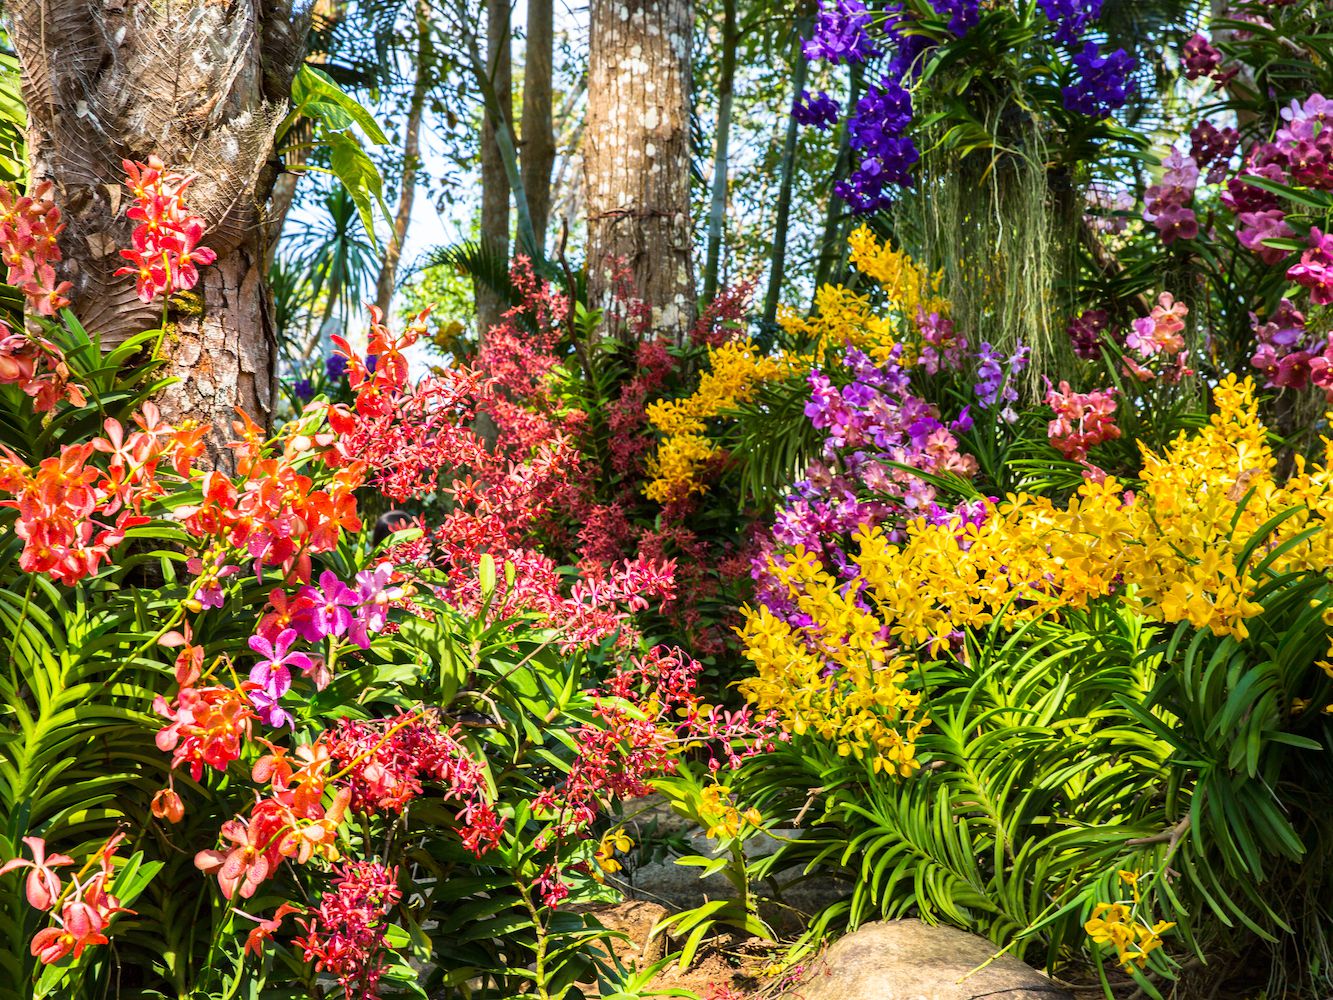 positie Eerder Peer Landscape Show on Twitter: "Amazingly colourful flower garden!  #FloralFriday #Flowers #Garden https://t.co/vENCto0ZOM" / Twitter